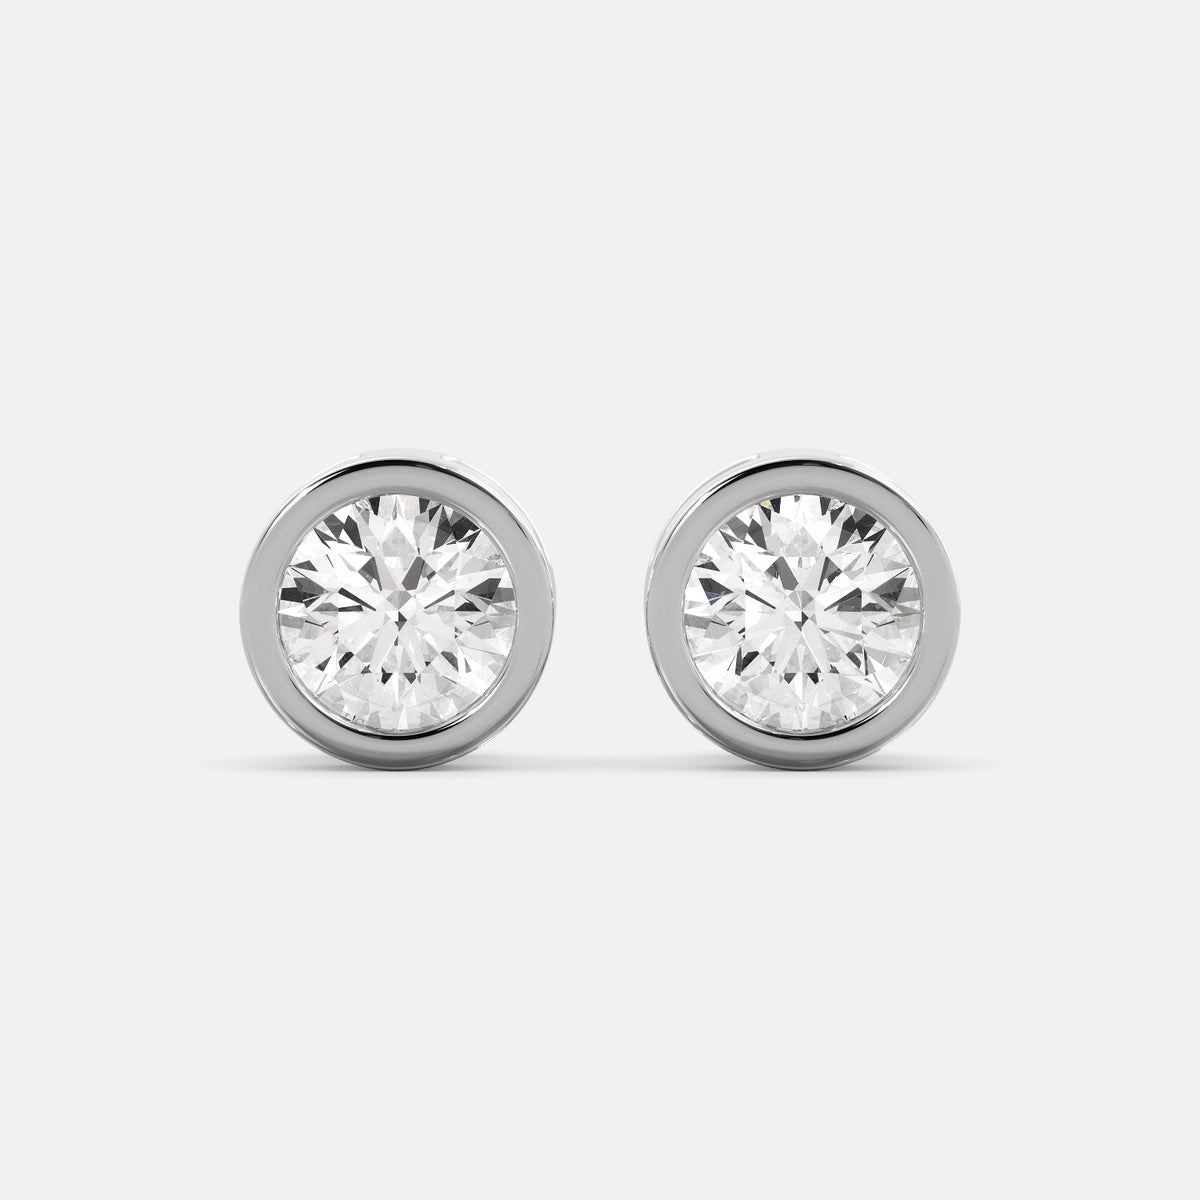 Round Diamond Bezel Stud Earrings